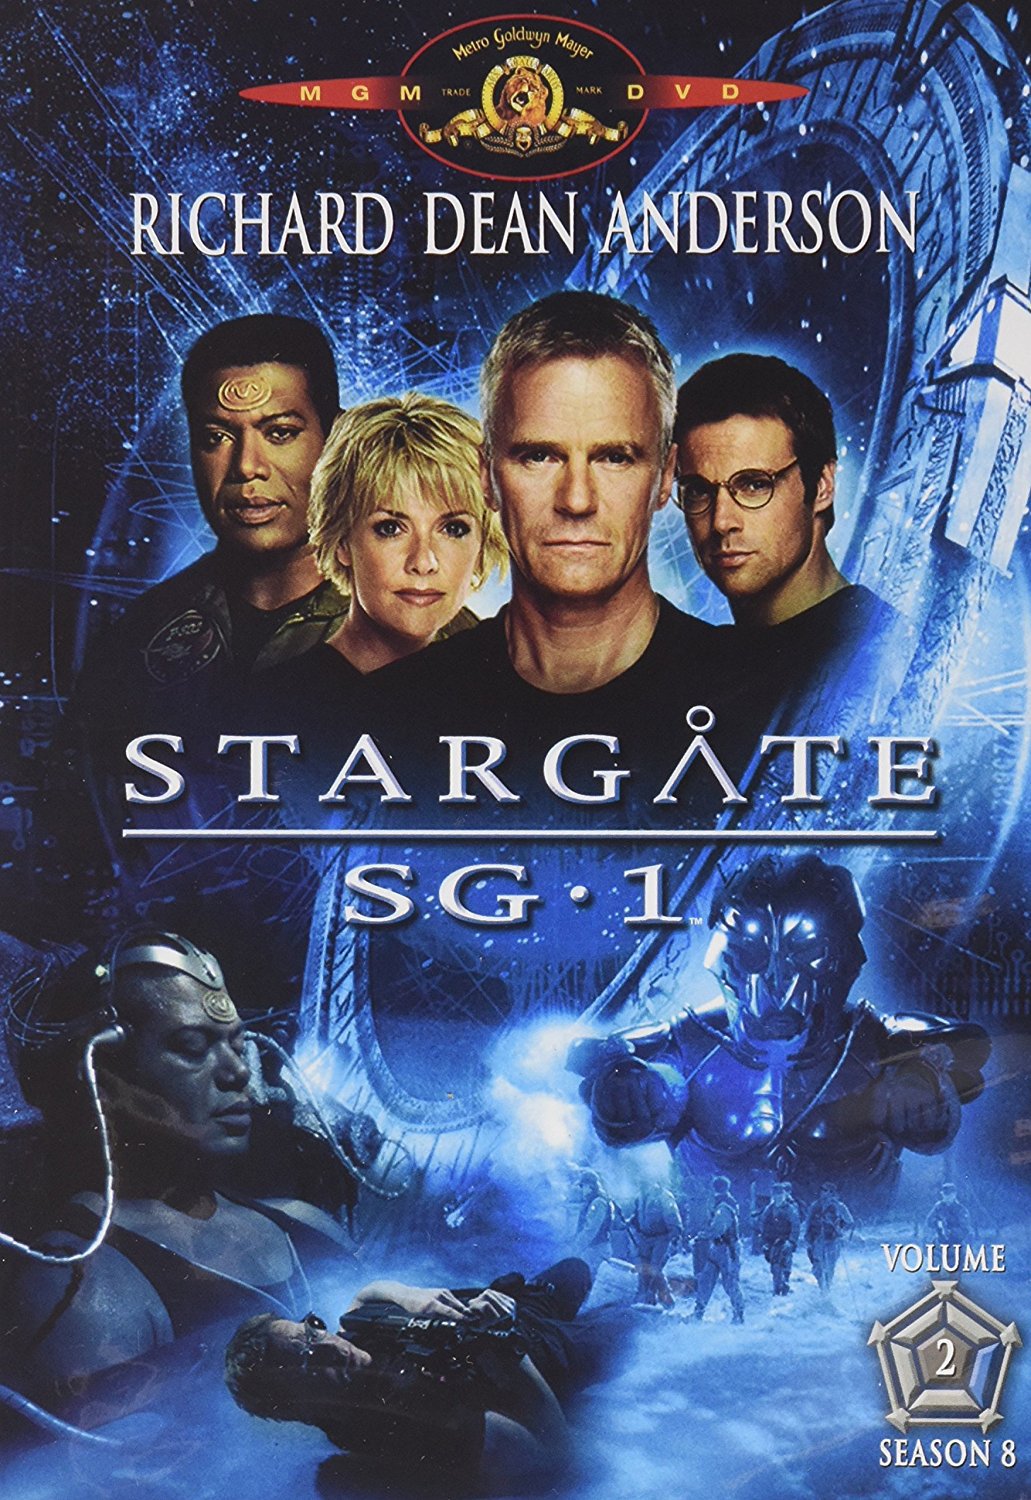 Stargate SG-1 Season 8 Vol 2